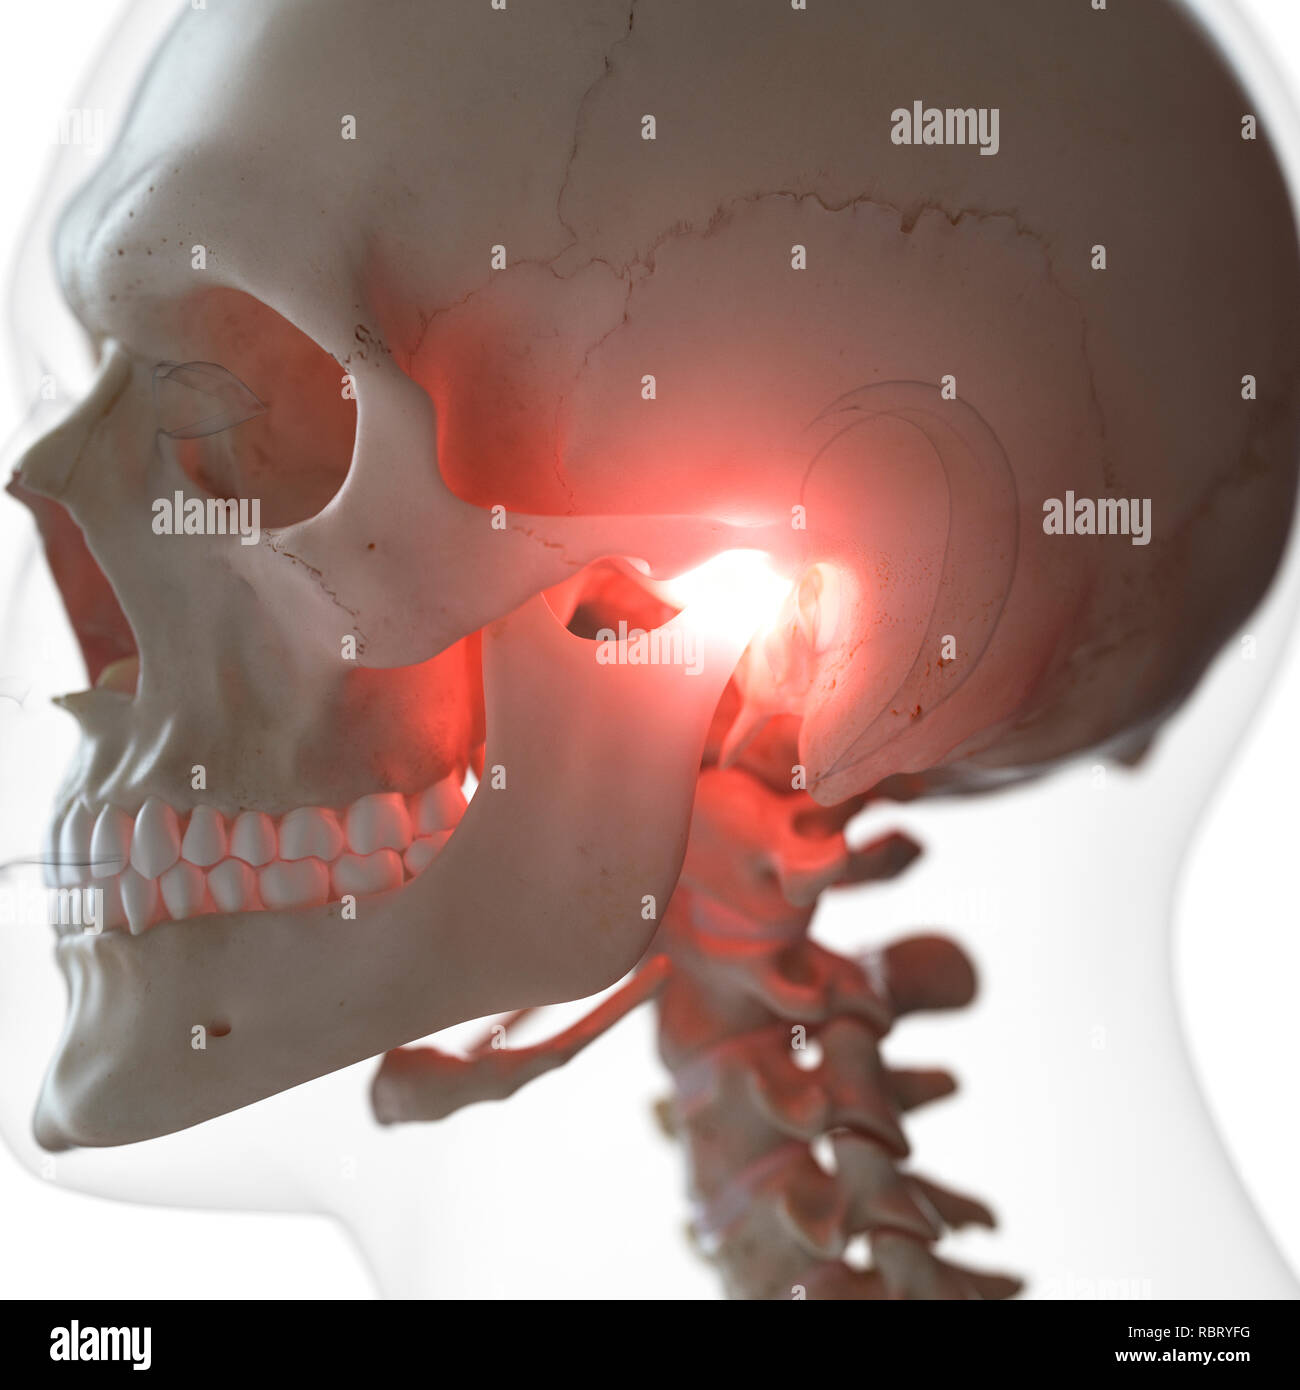 Illustration of a painful temporomandibular joint. Stock Photo